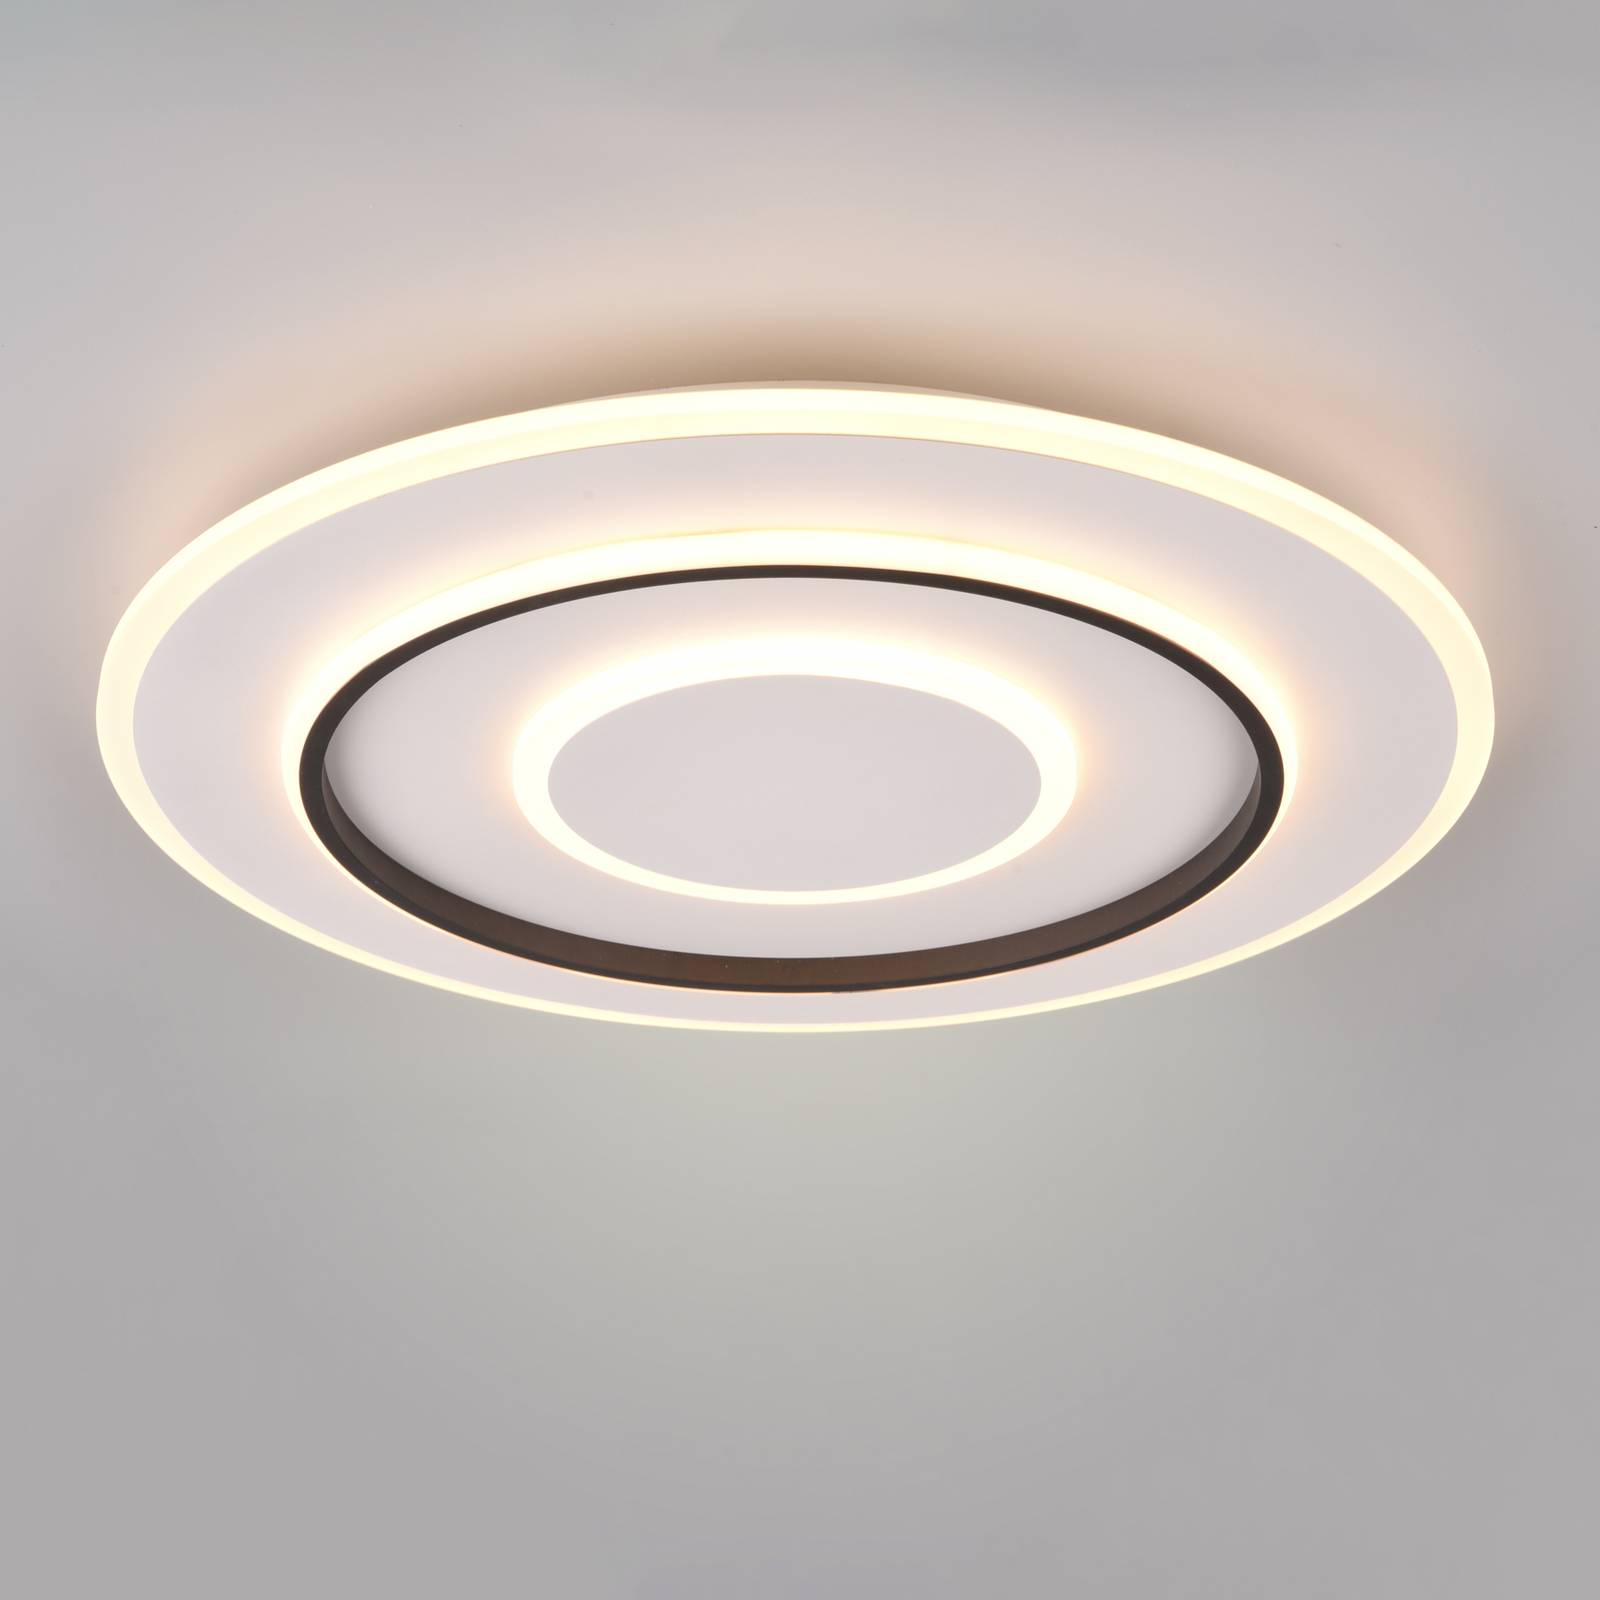 Image of Reality Leuchten Plafonnier LED Jora rond Télécommande, Ø 60 cm 4017807574845